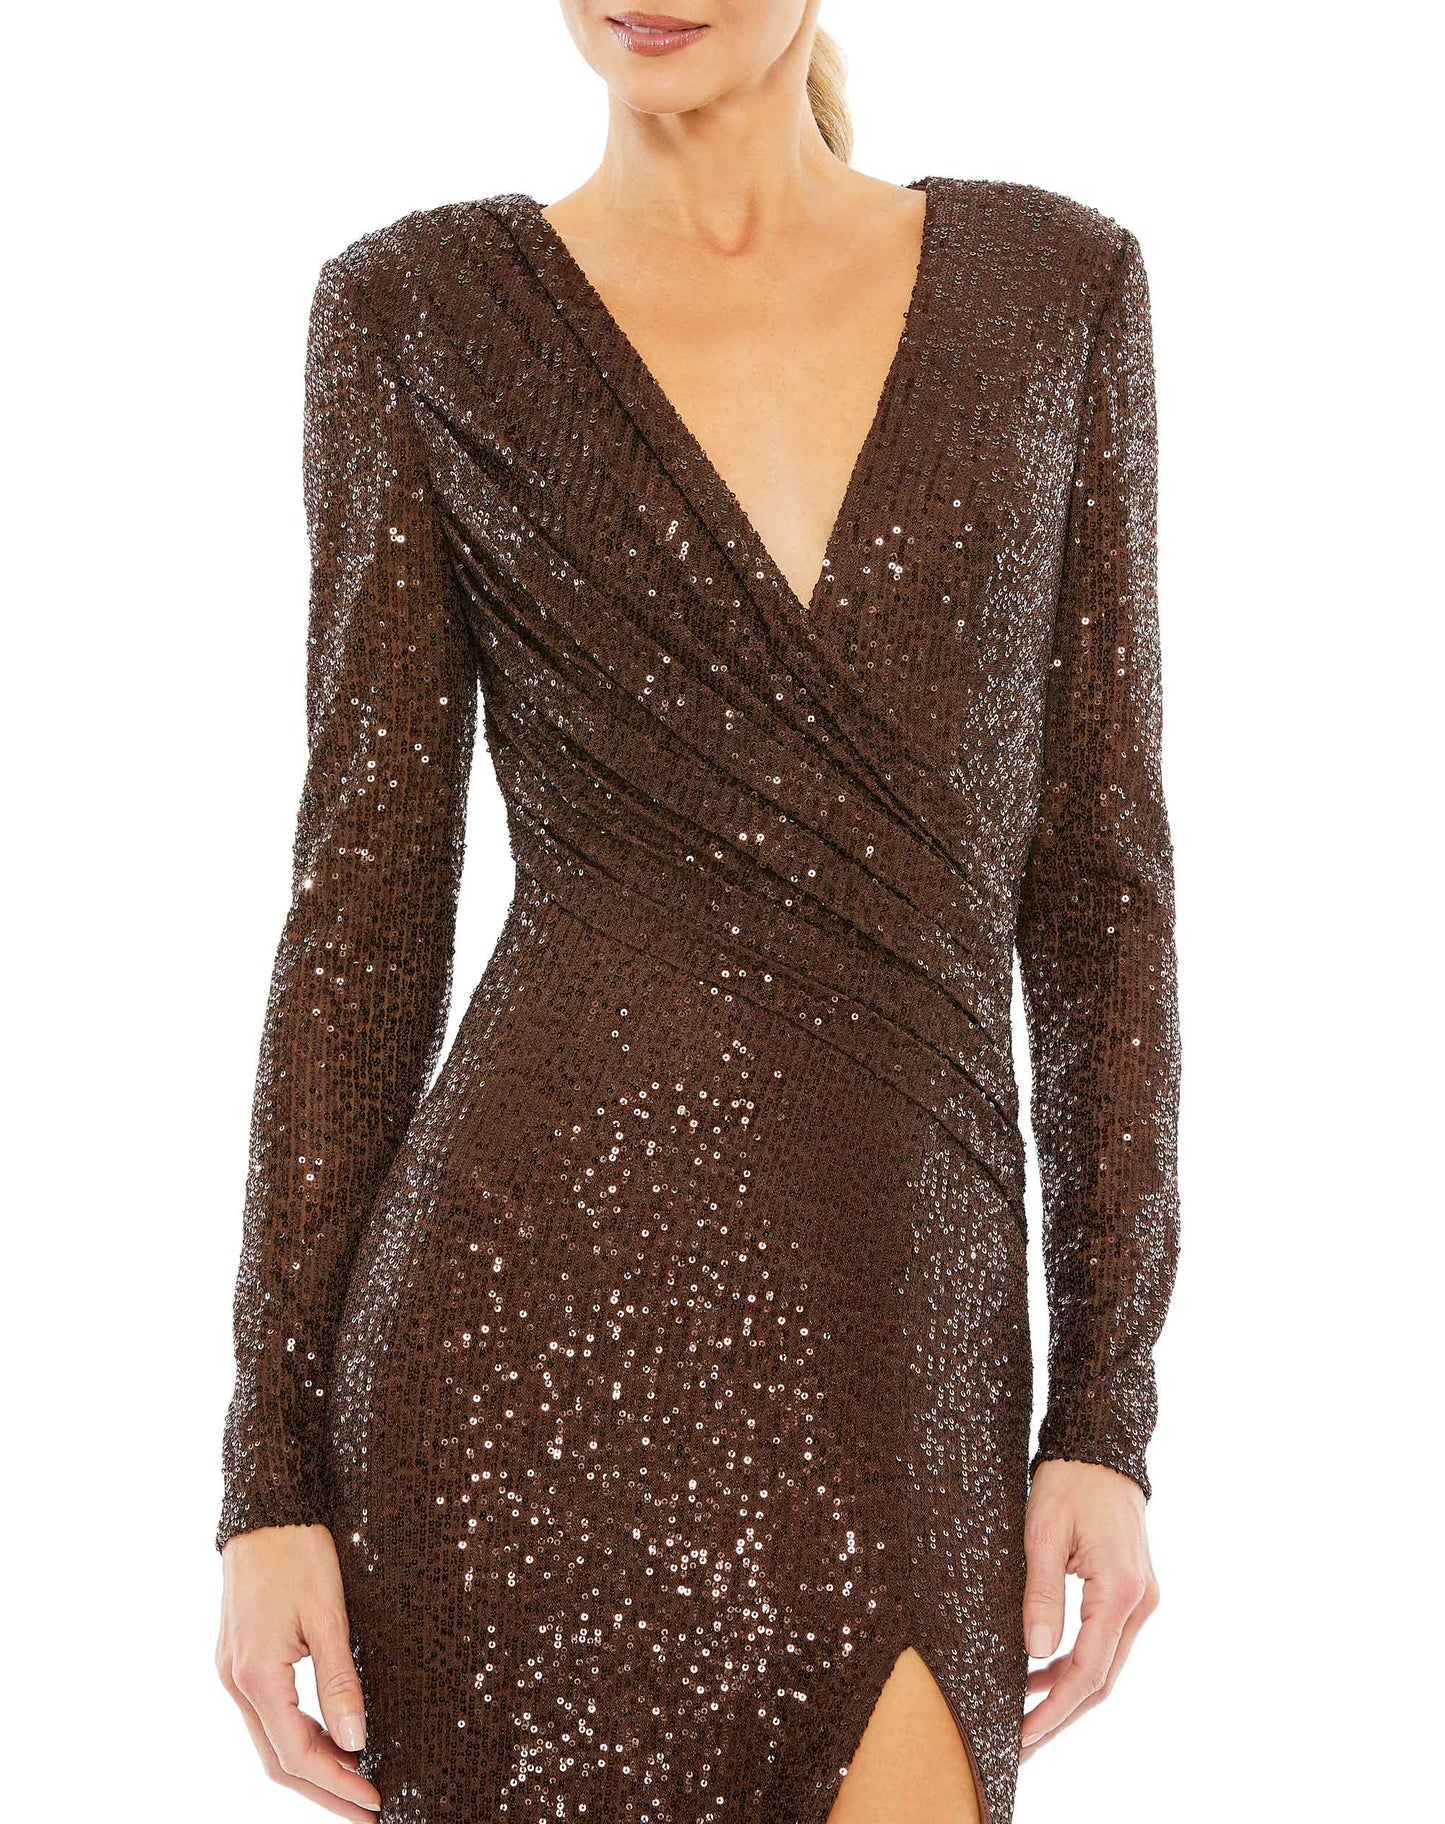 Mac Duggal Long Sleeve Formal Sequin Dress 26723 - The Dress Outlet